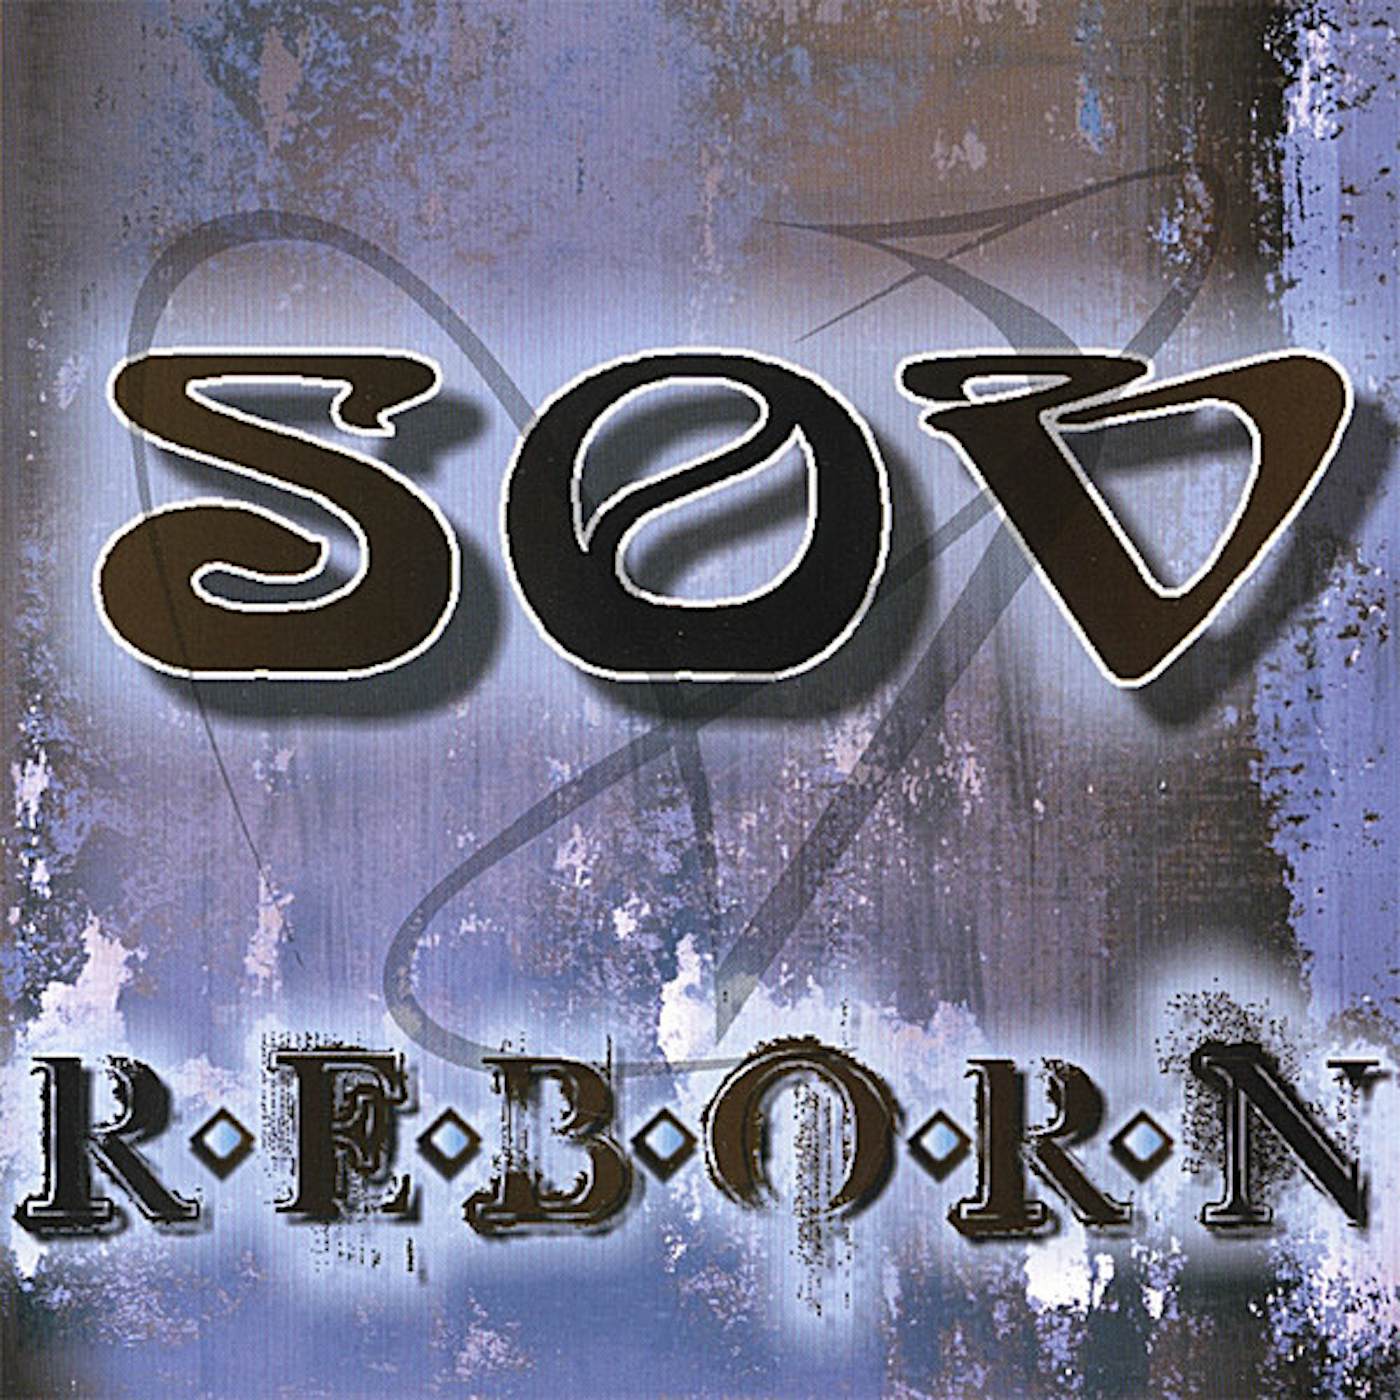 SOV REBORN CD